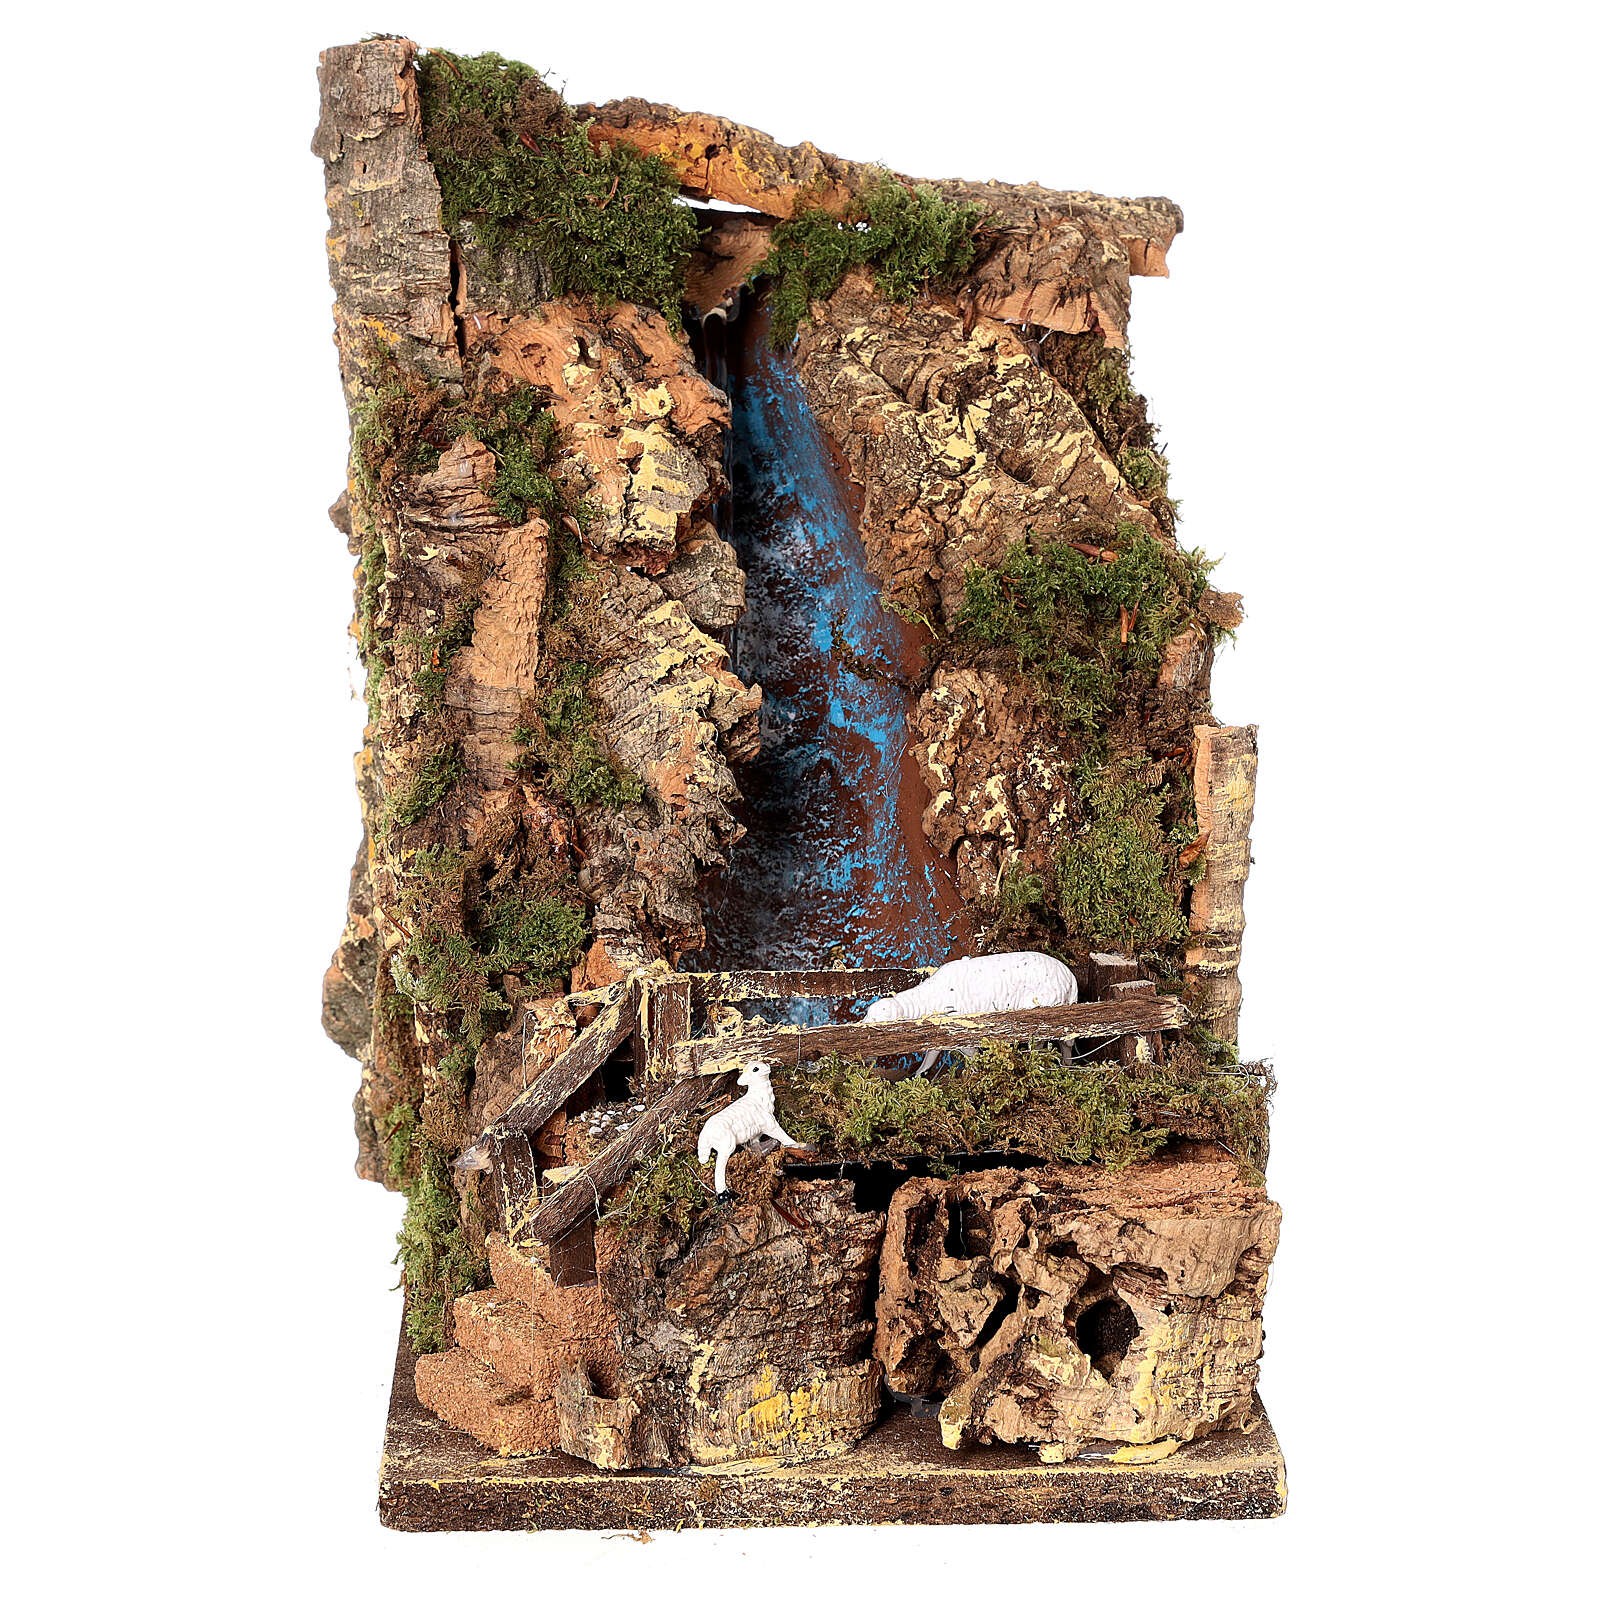 Cascata 18x33x20 cm (7,08x12,99x7,87 Inch) con Ponte e Pecore per Presepe Holyho - Afbeelding 1 van 1